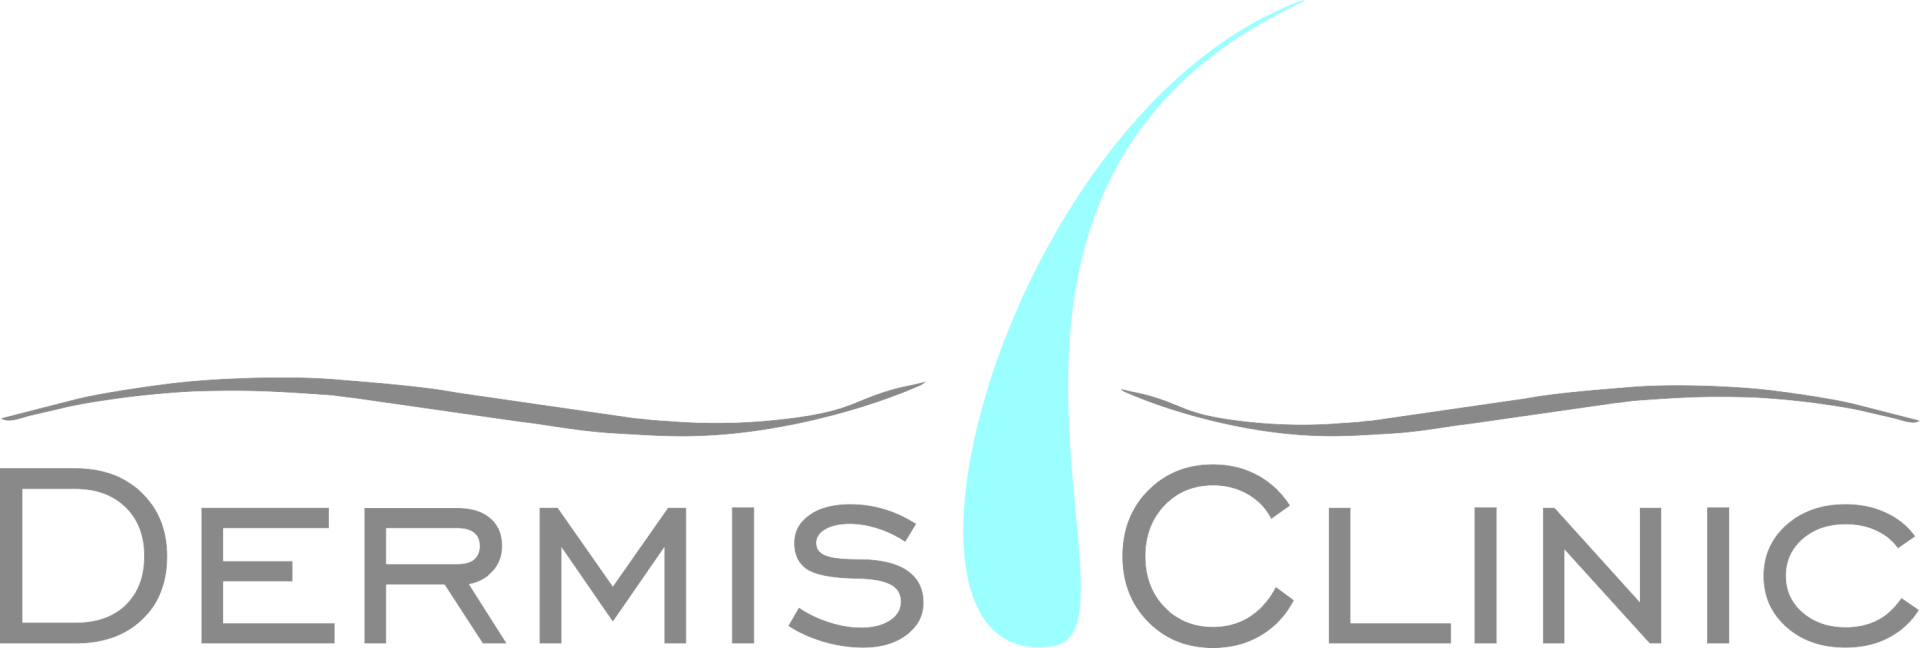 Dermis Clinic logo